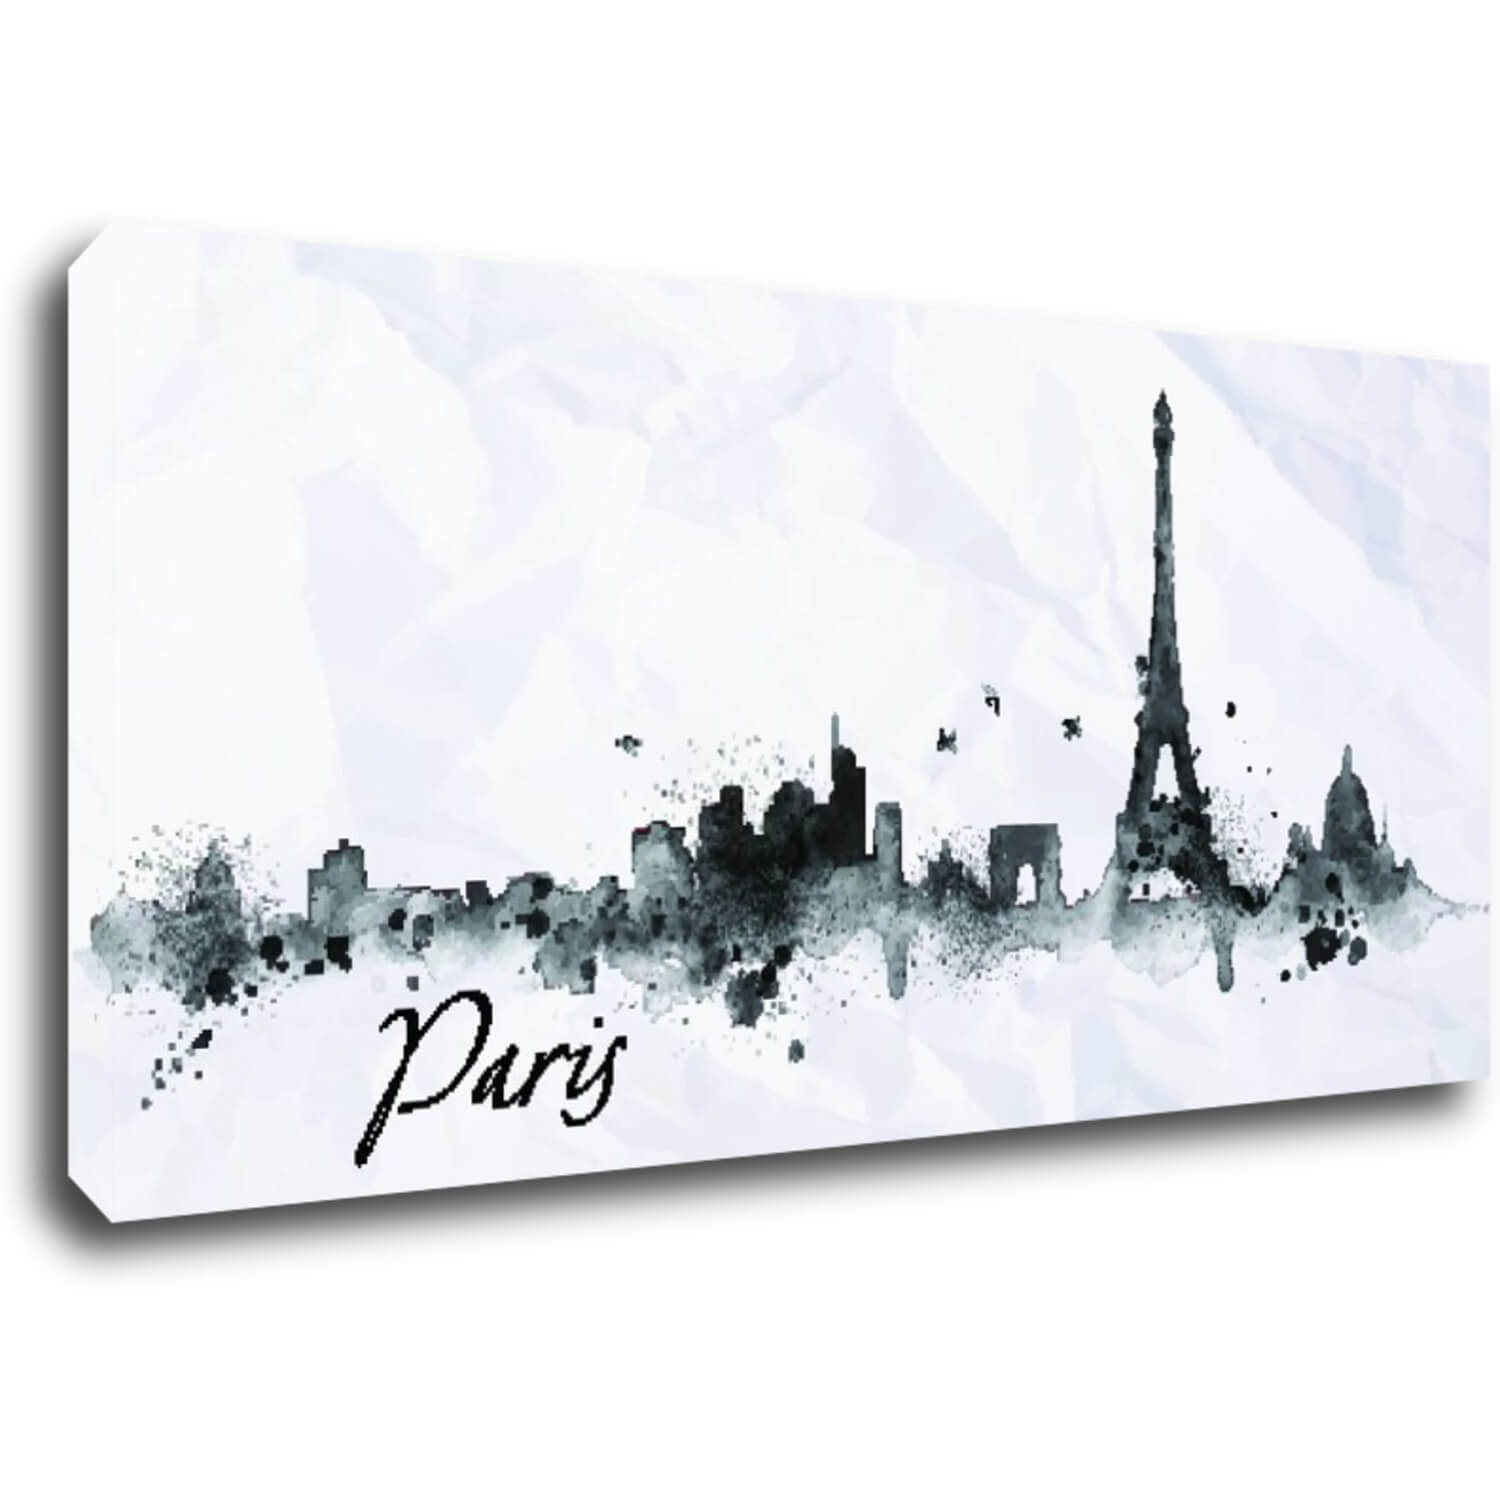 Obraz Paříž panorama - 90 x 40 cm